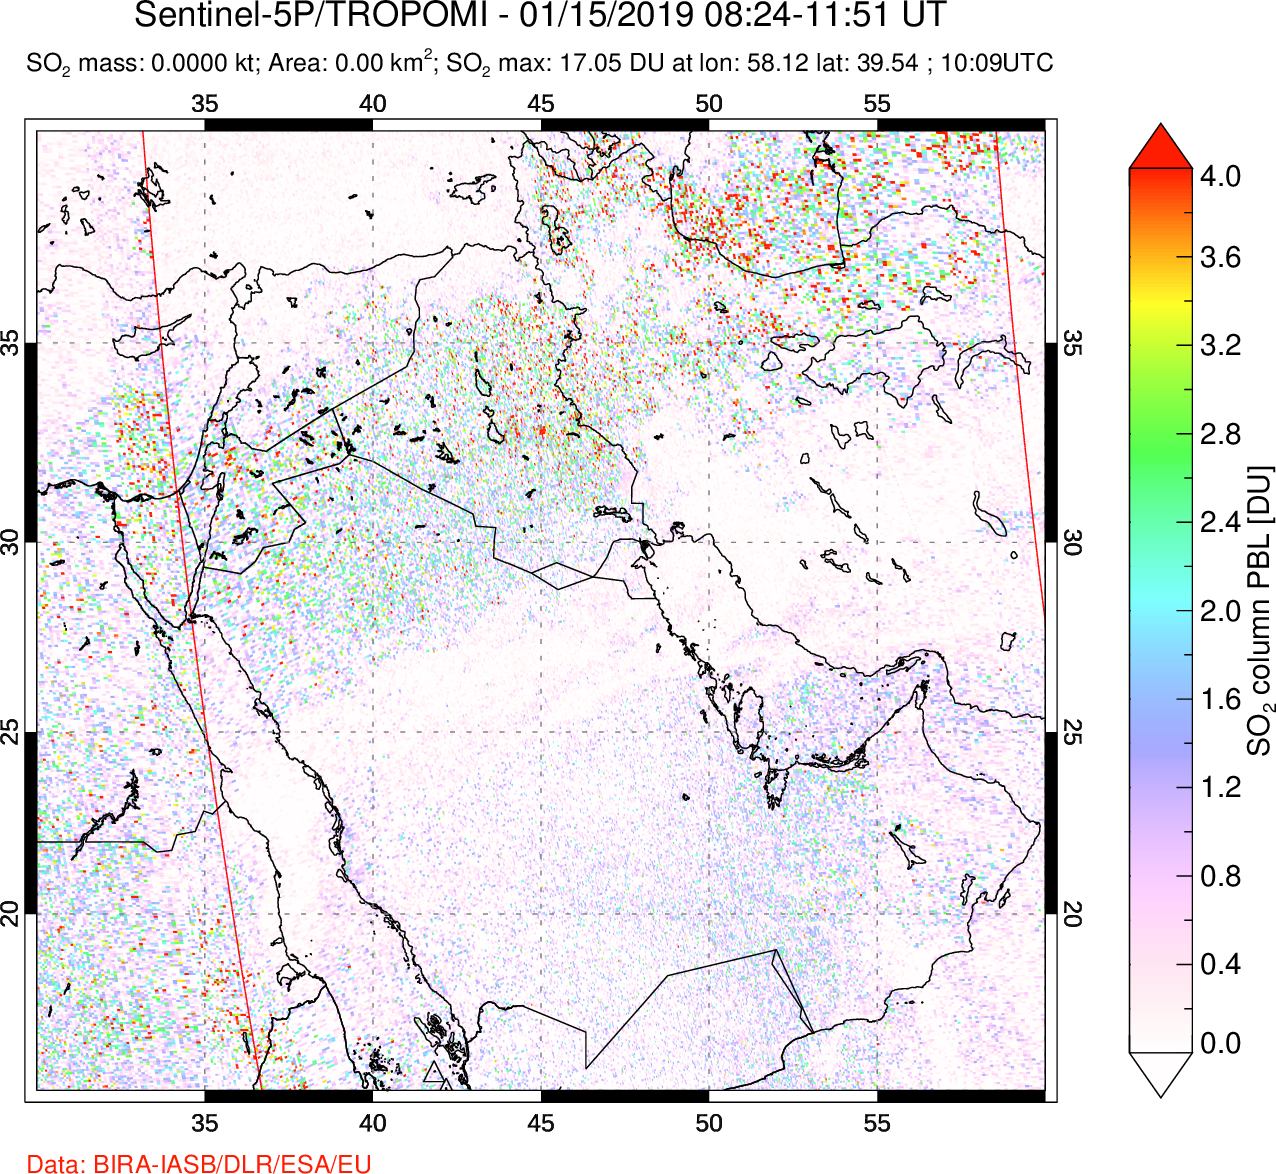 A sulfur dioxide image over Middle East on Jan 15, 2019.